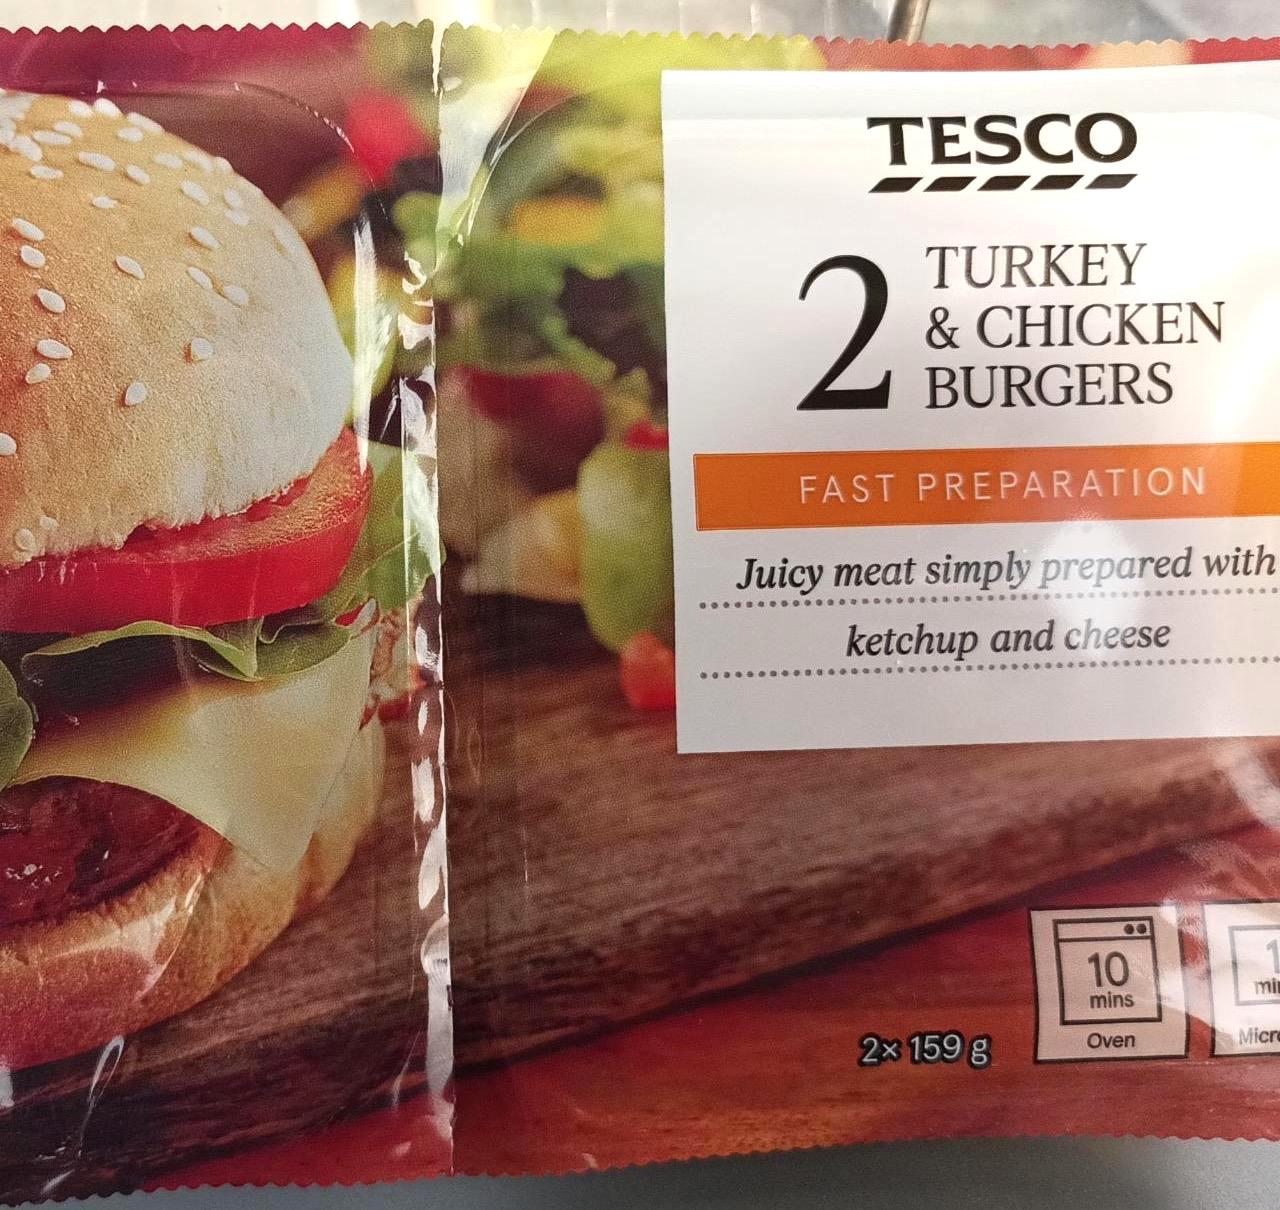 Képek - 2 turkey & chicken burgers Tesco